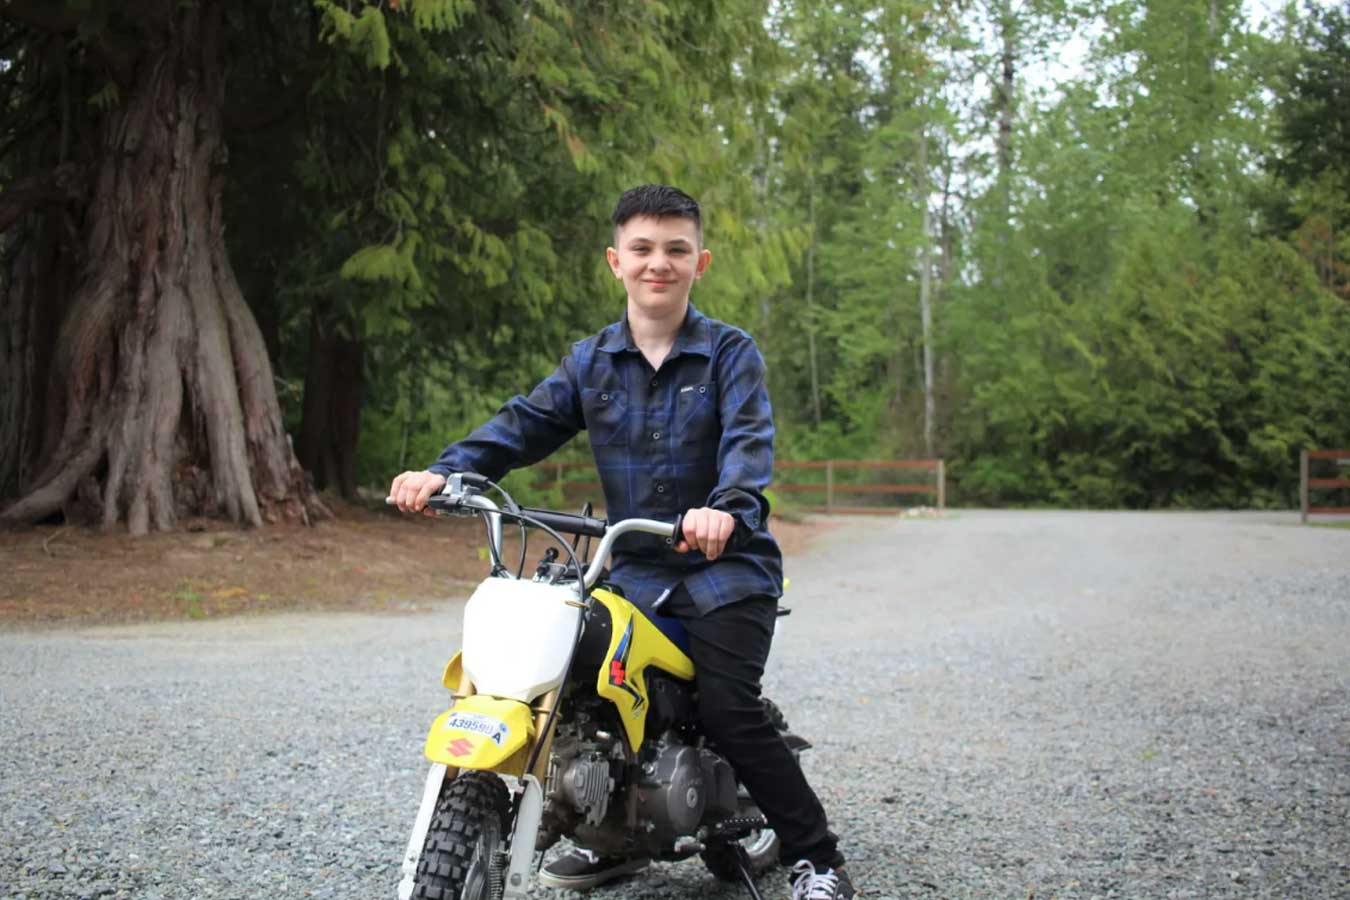 Teenager on yellow motorbike in woodland setting